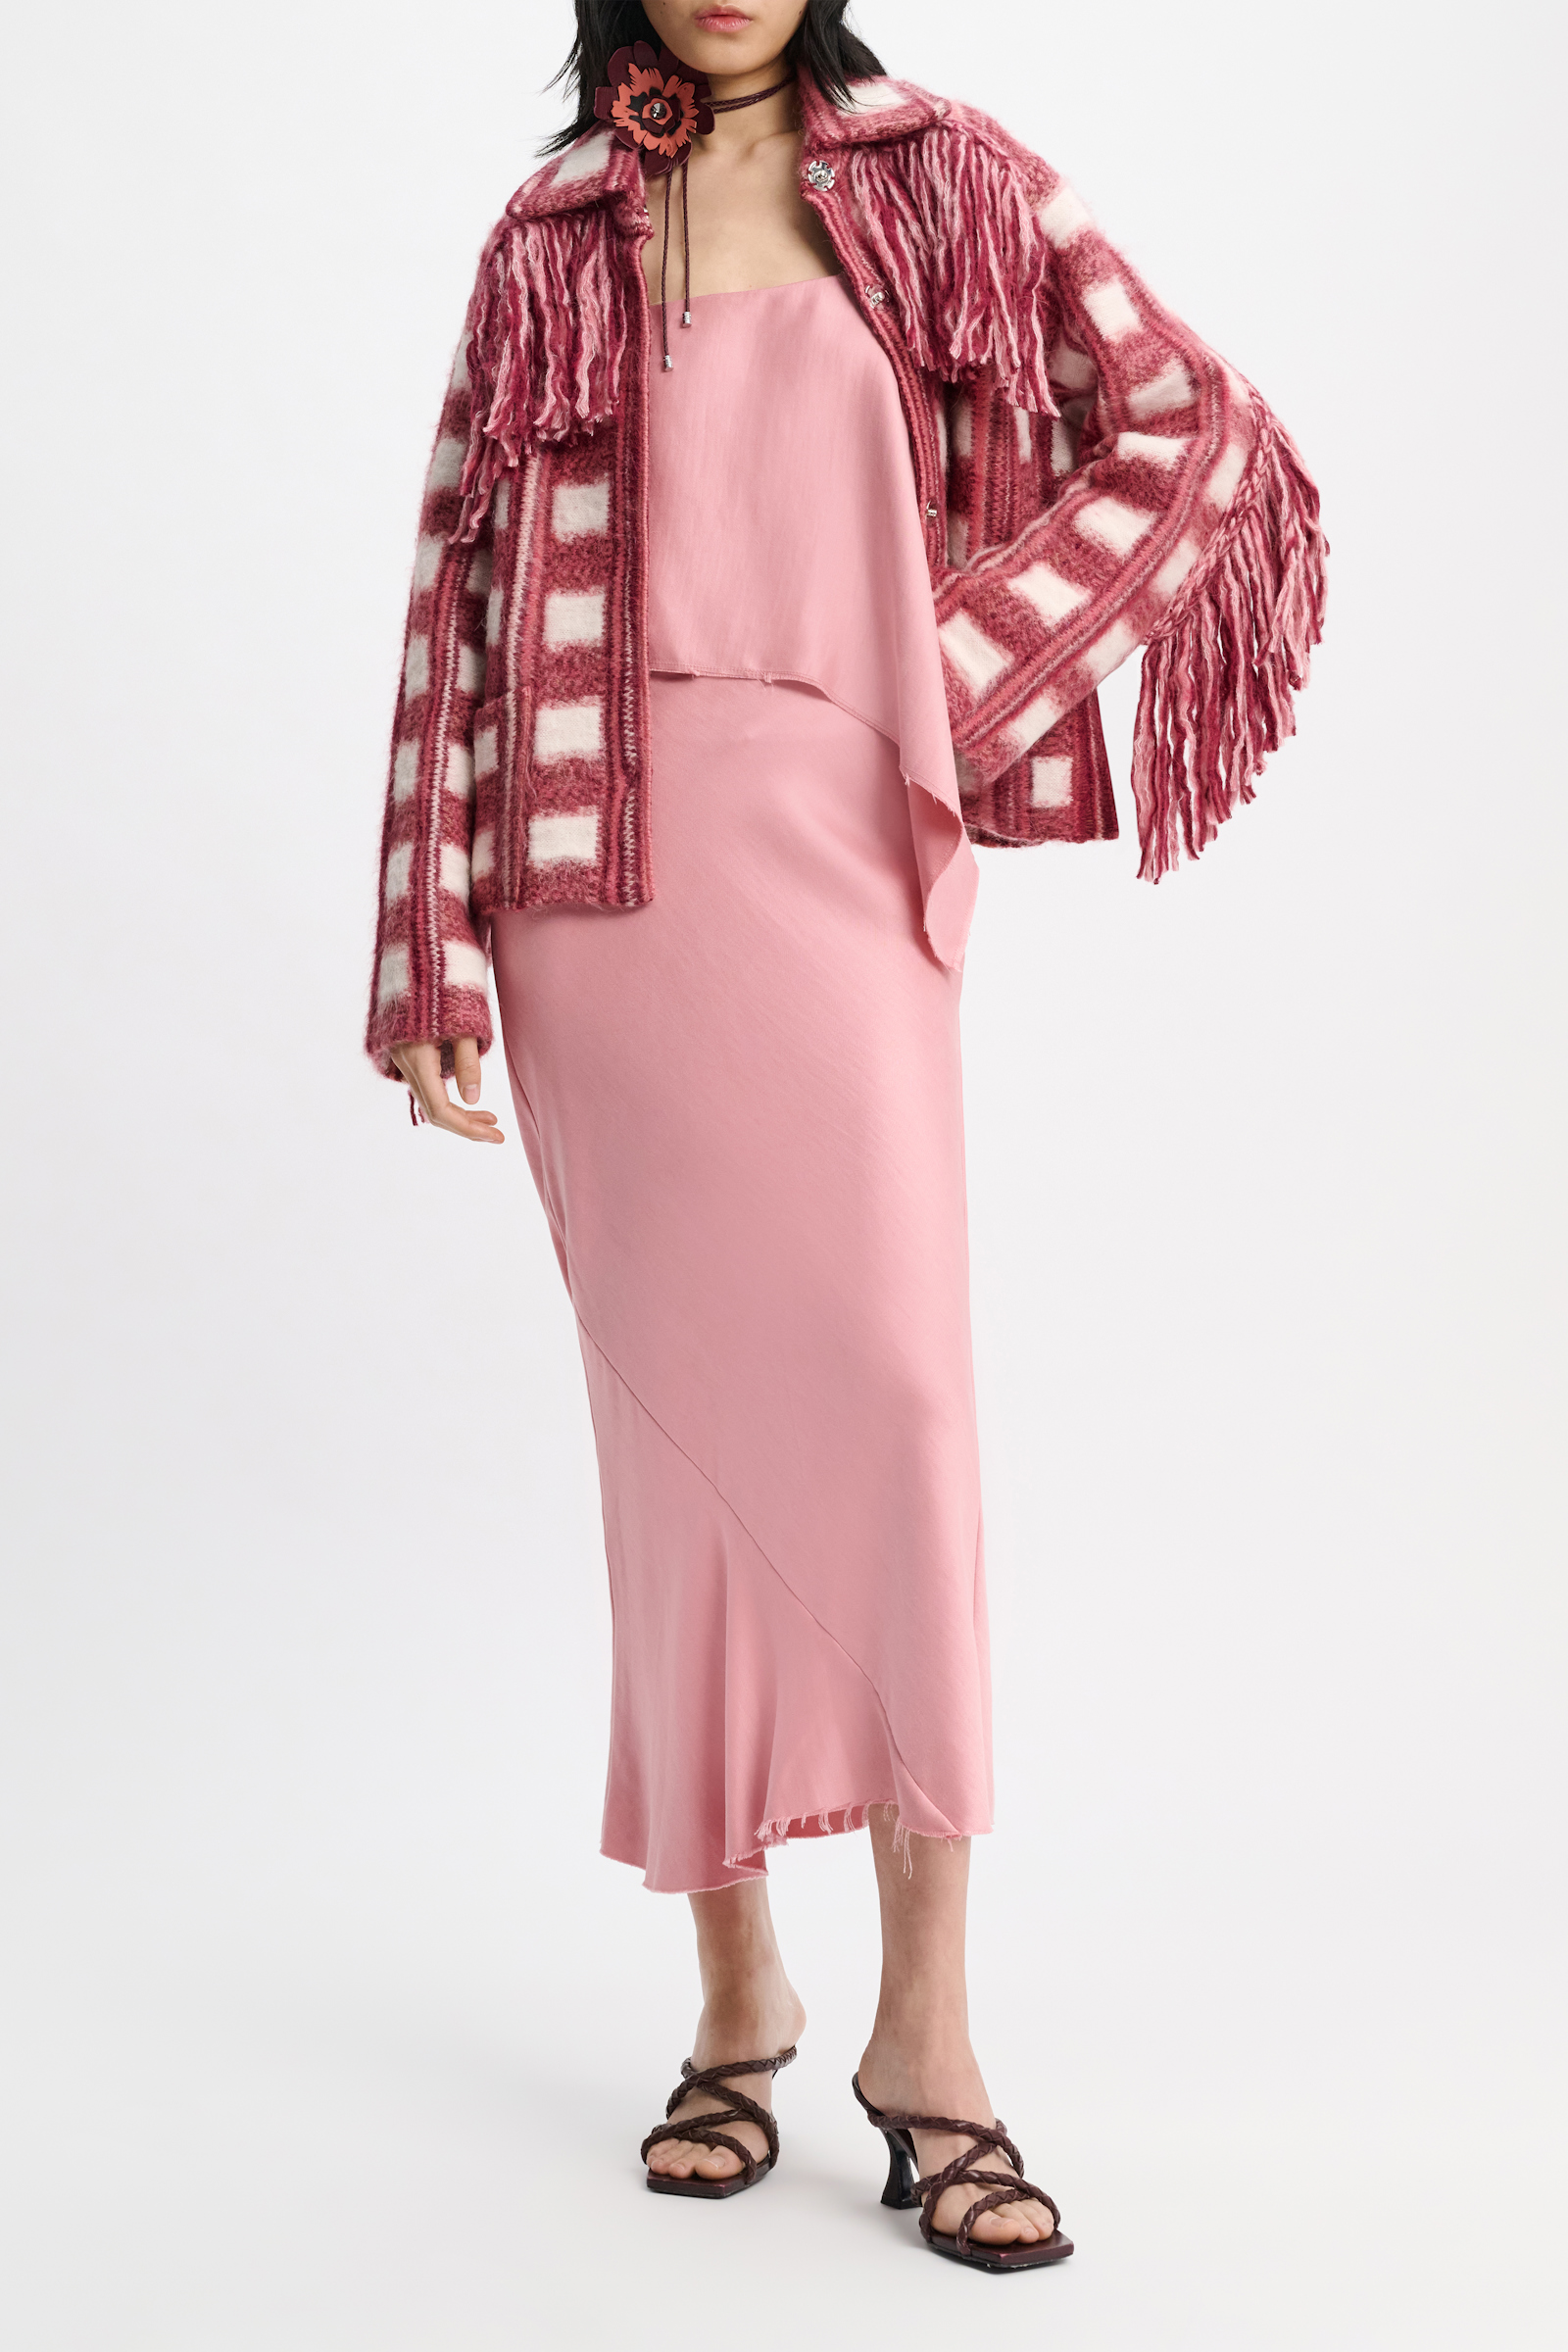 Dorothee Schumacher Plaid knit jacquard jacket with XL fringe pink check mix